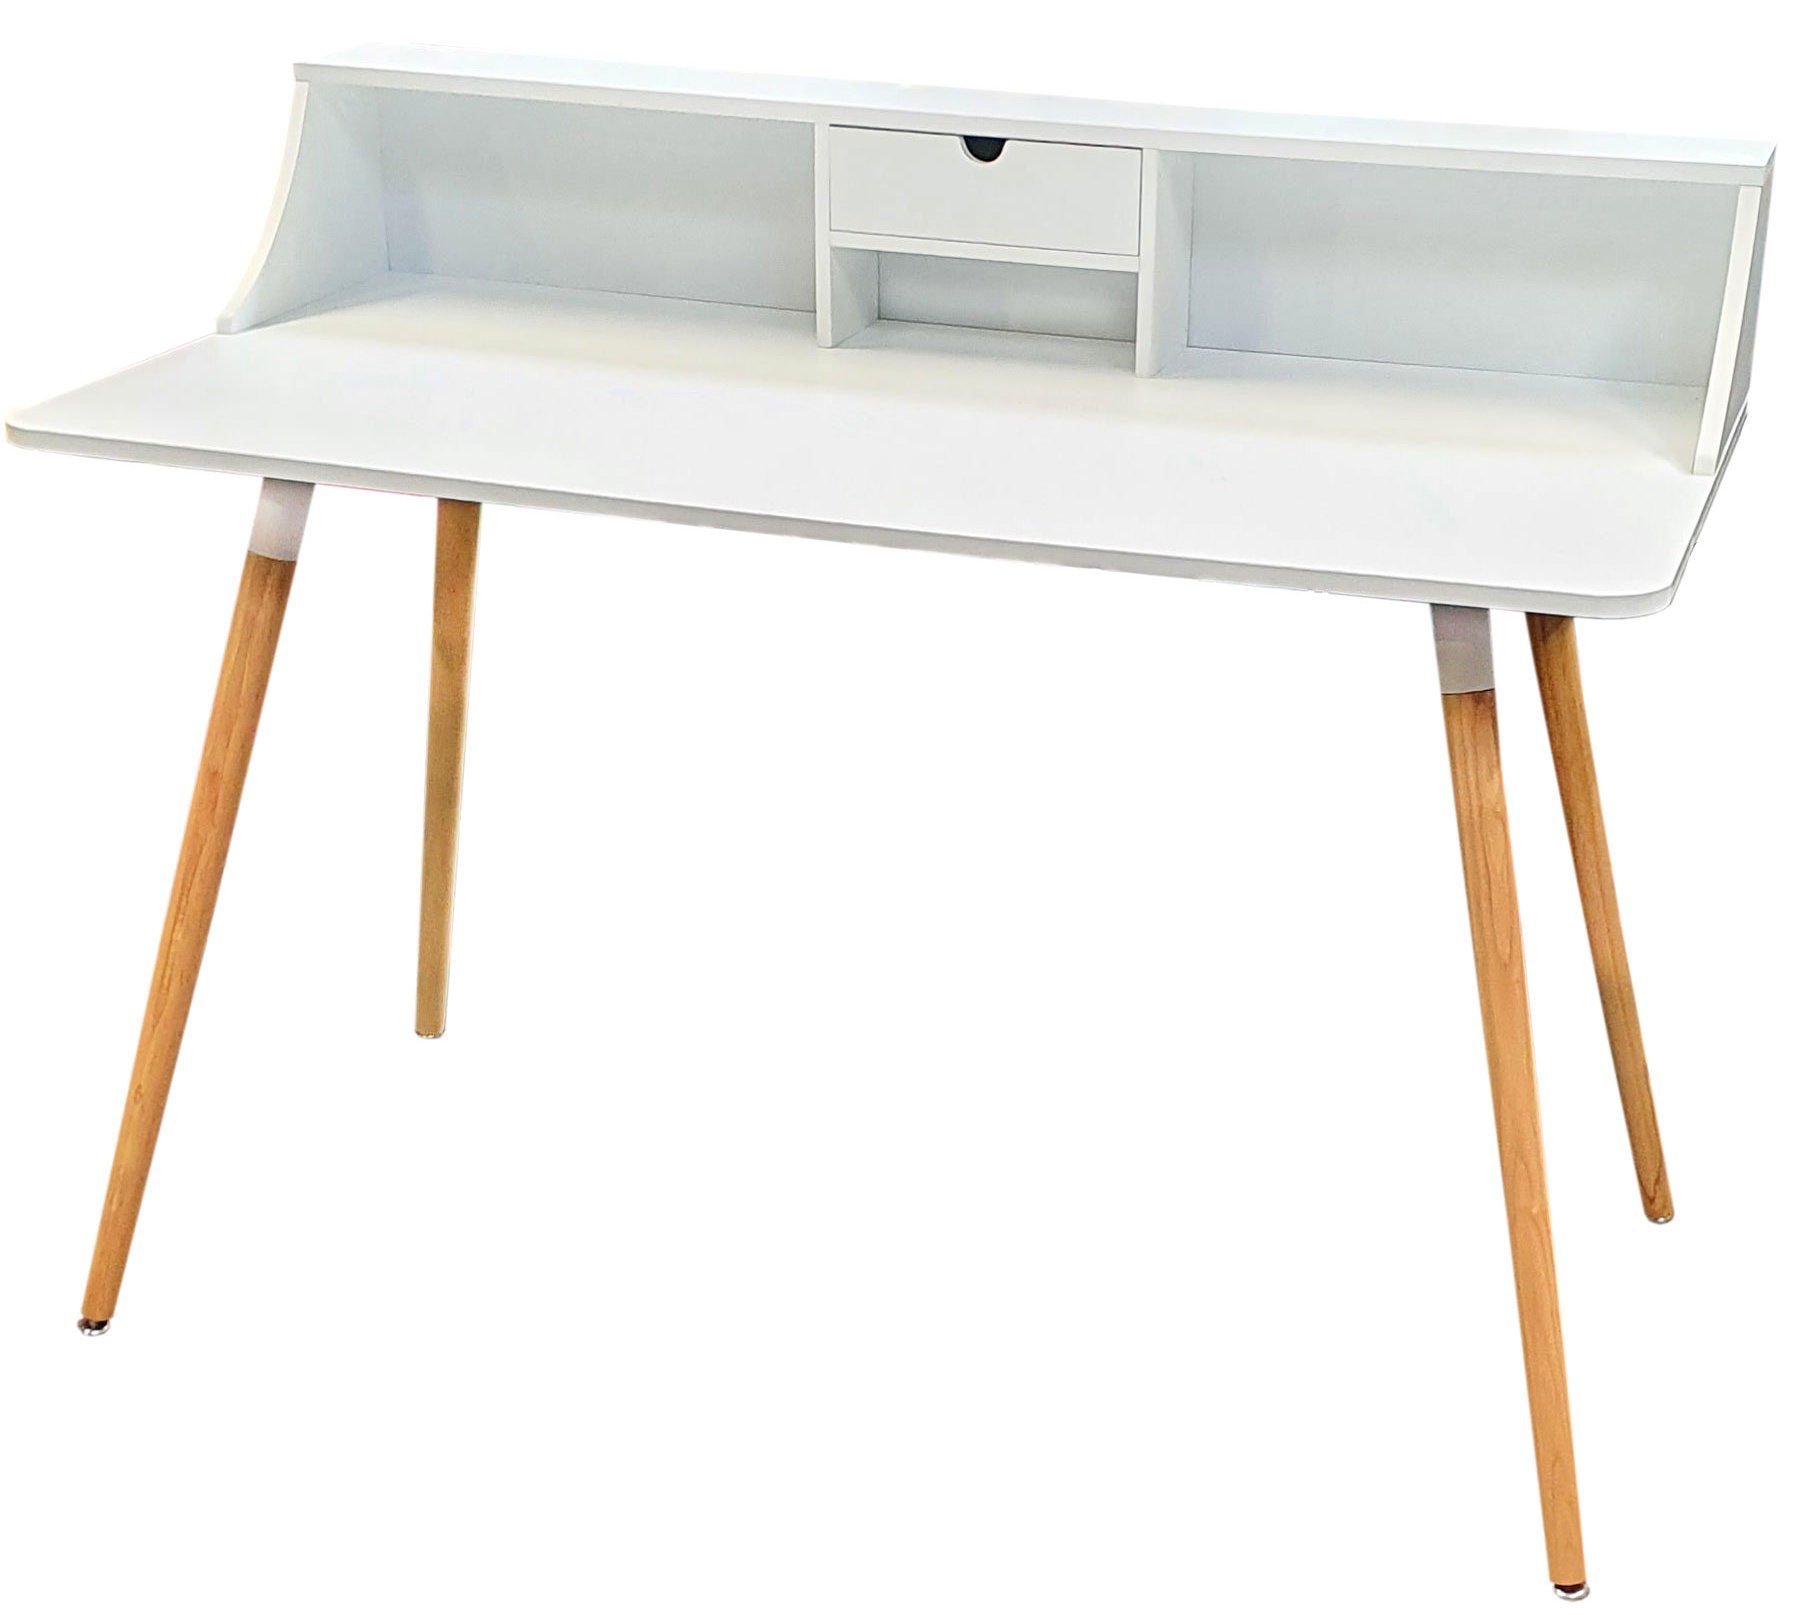 osoltus Badregal osoltus Design Schreibtisch Computertisch skandinavisch 120cm weiß